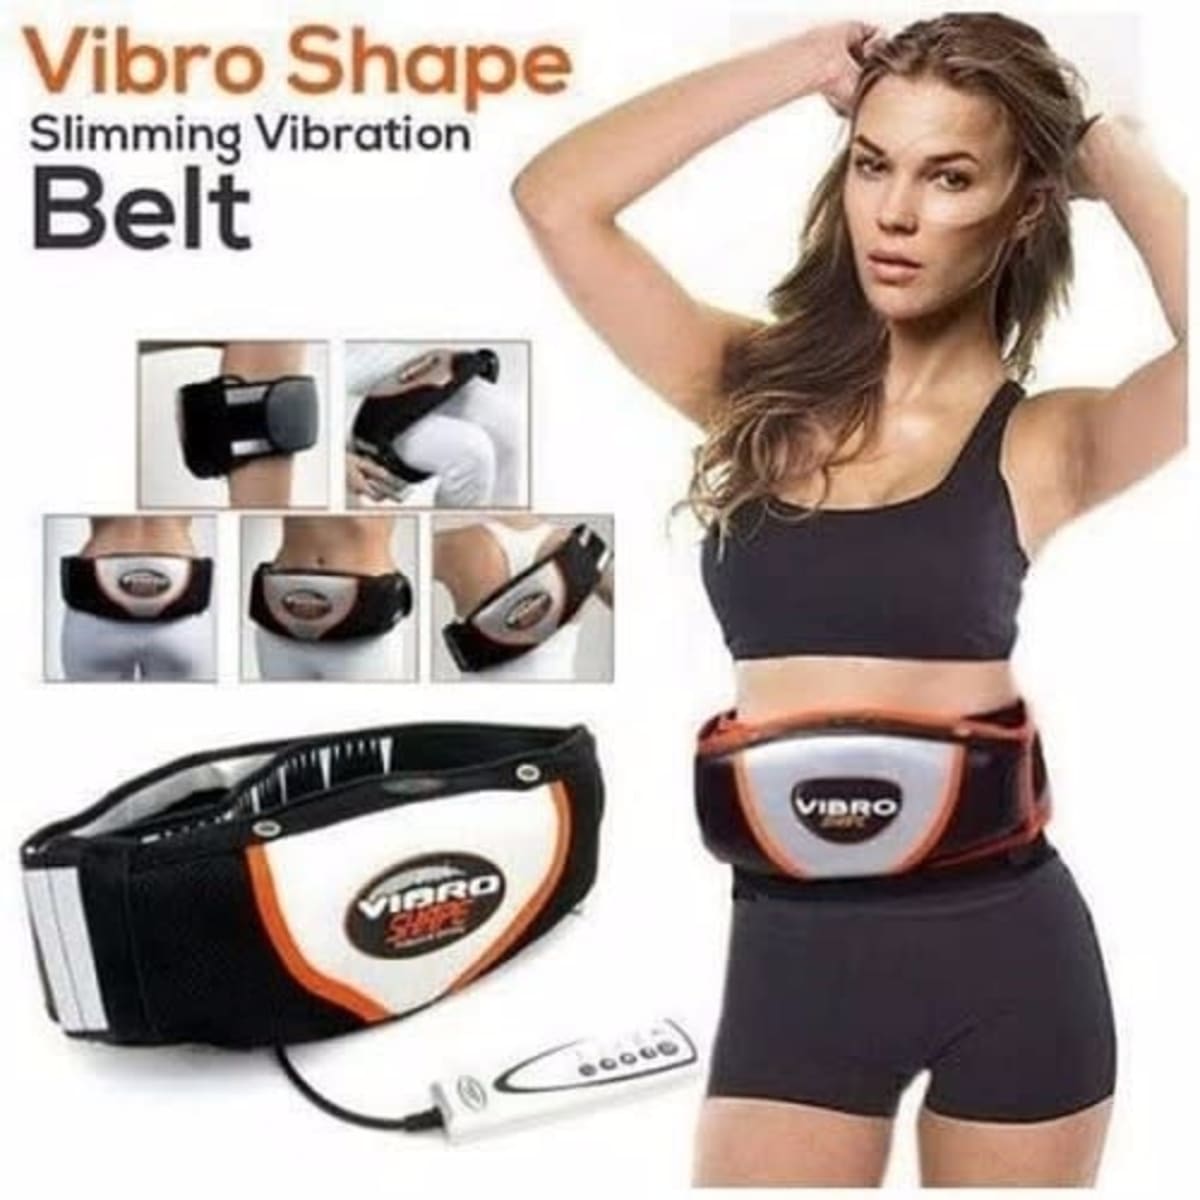 Professional Vibro Shape Slimming Belt In Pakistan